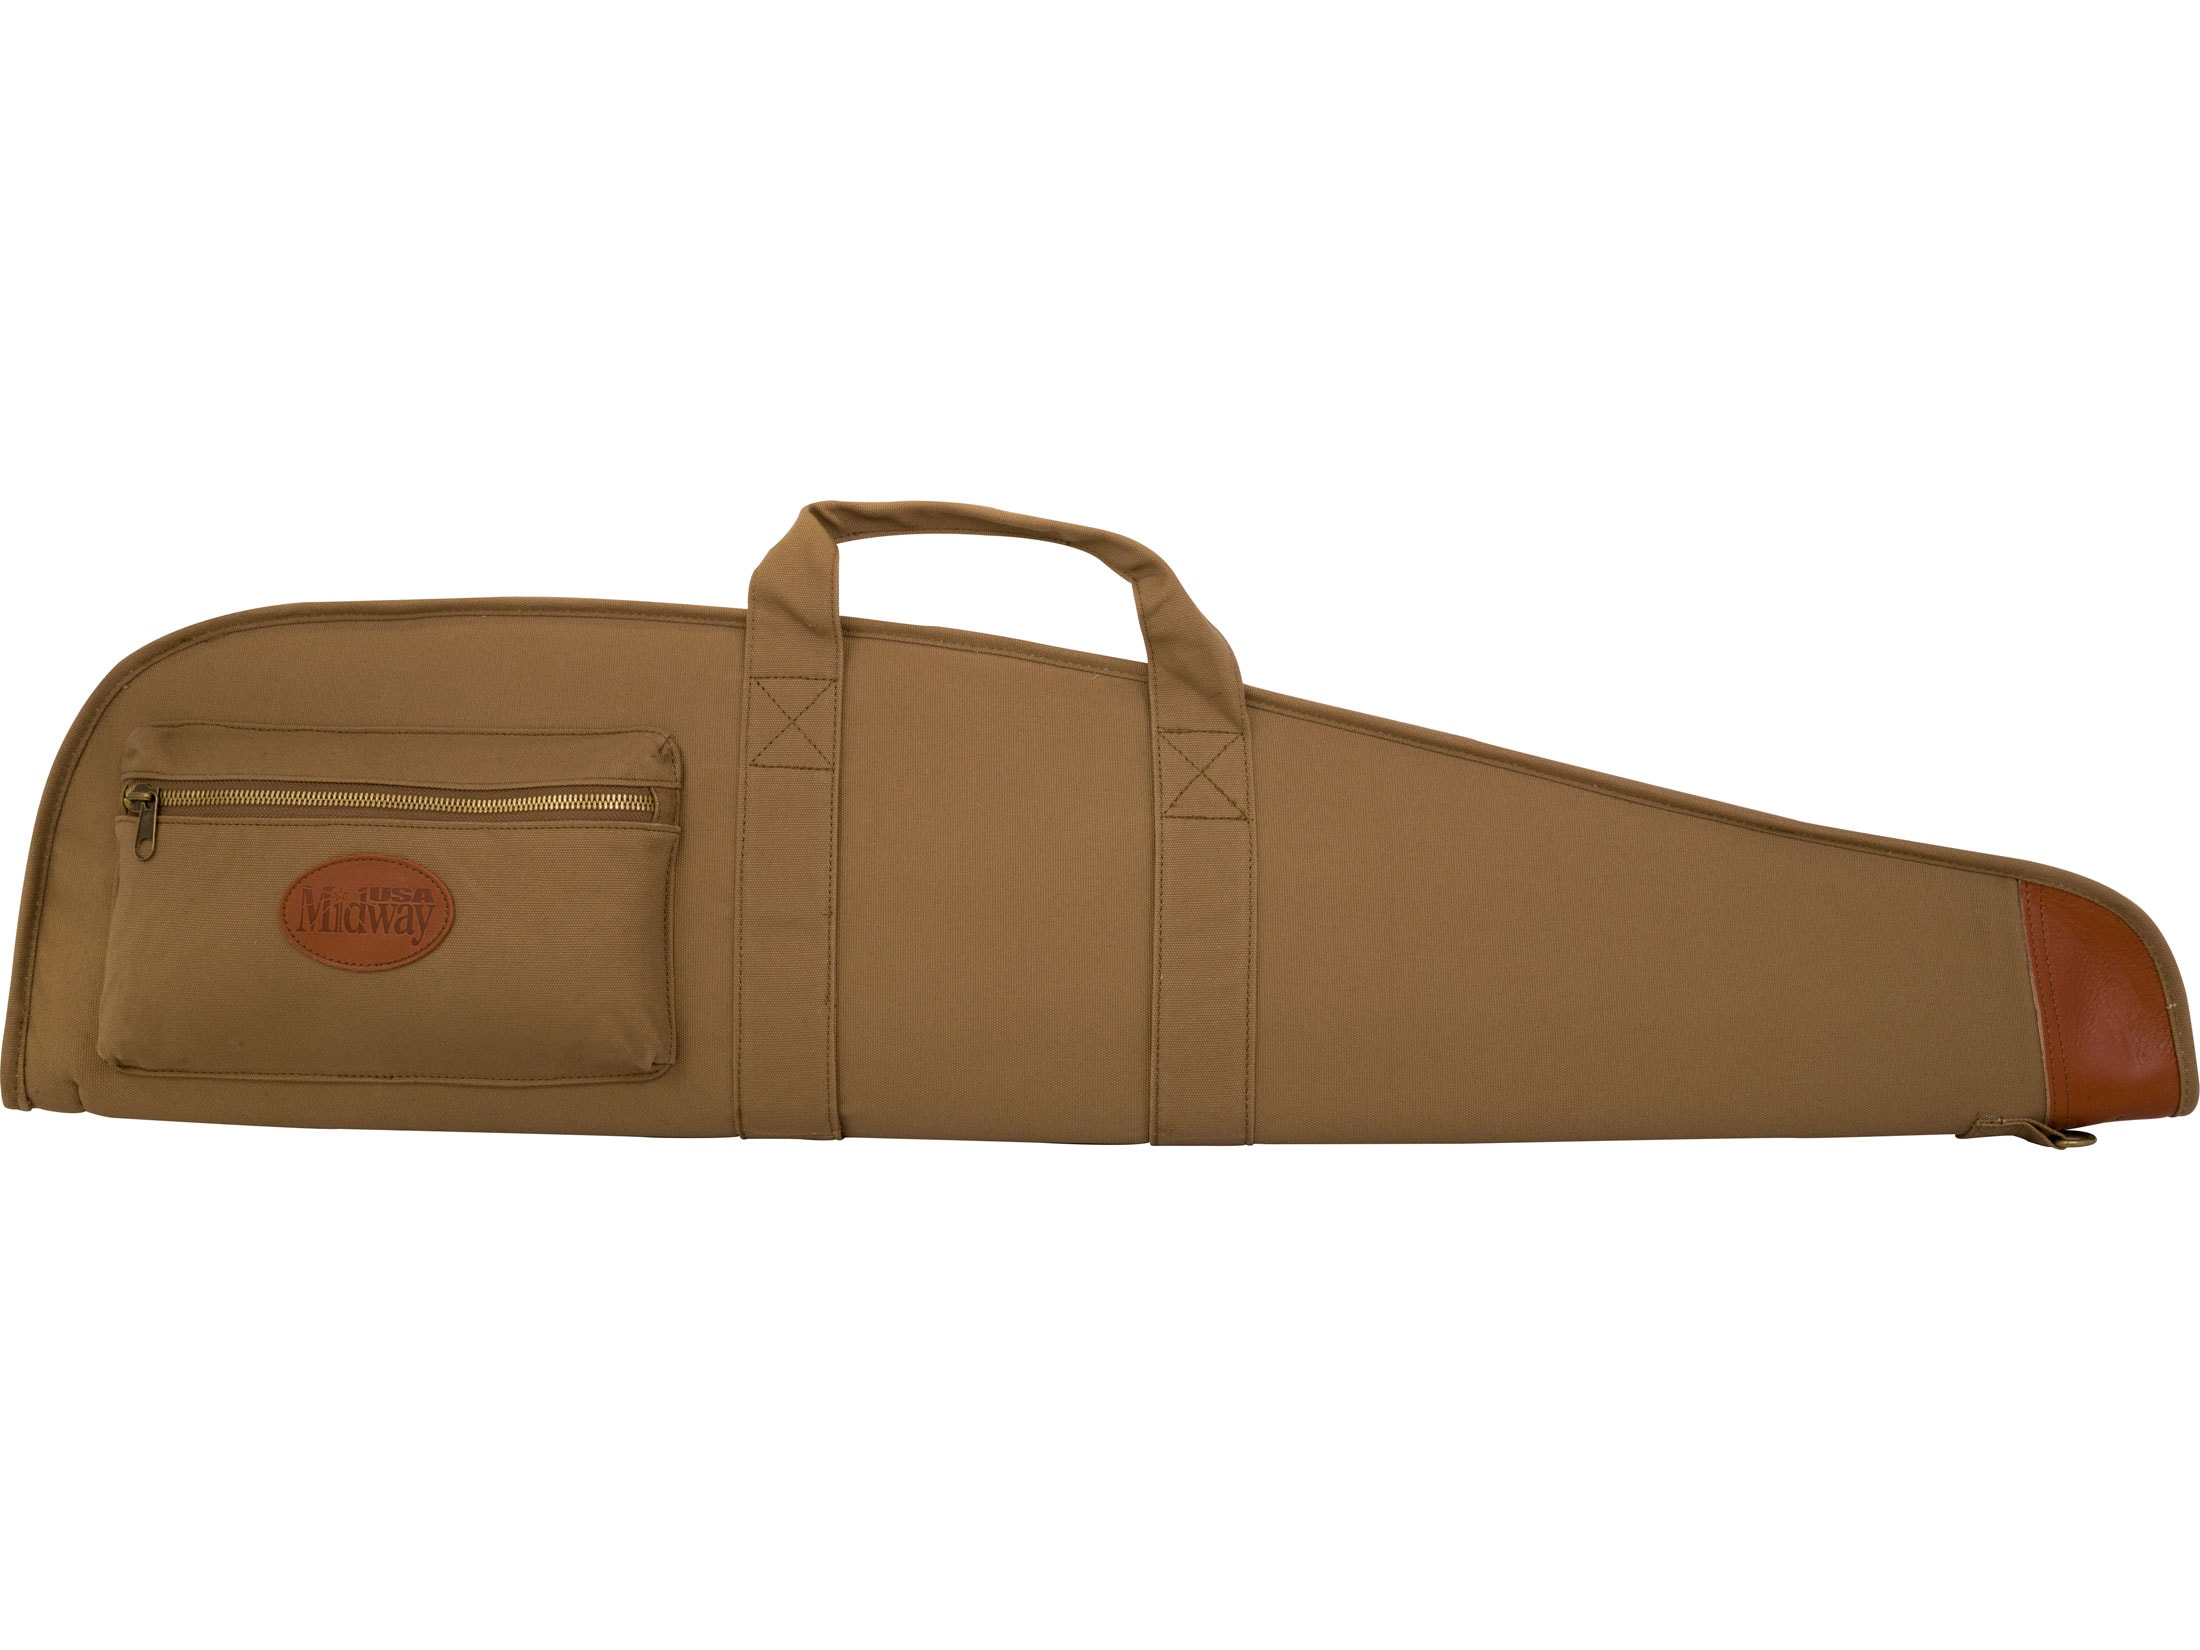 Leather Canvas Shotgun Case Gun Carry Bag For shotguns up to 50 1/2 inches 